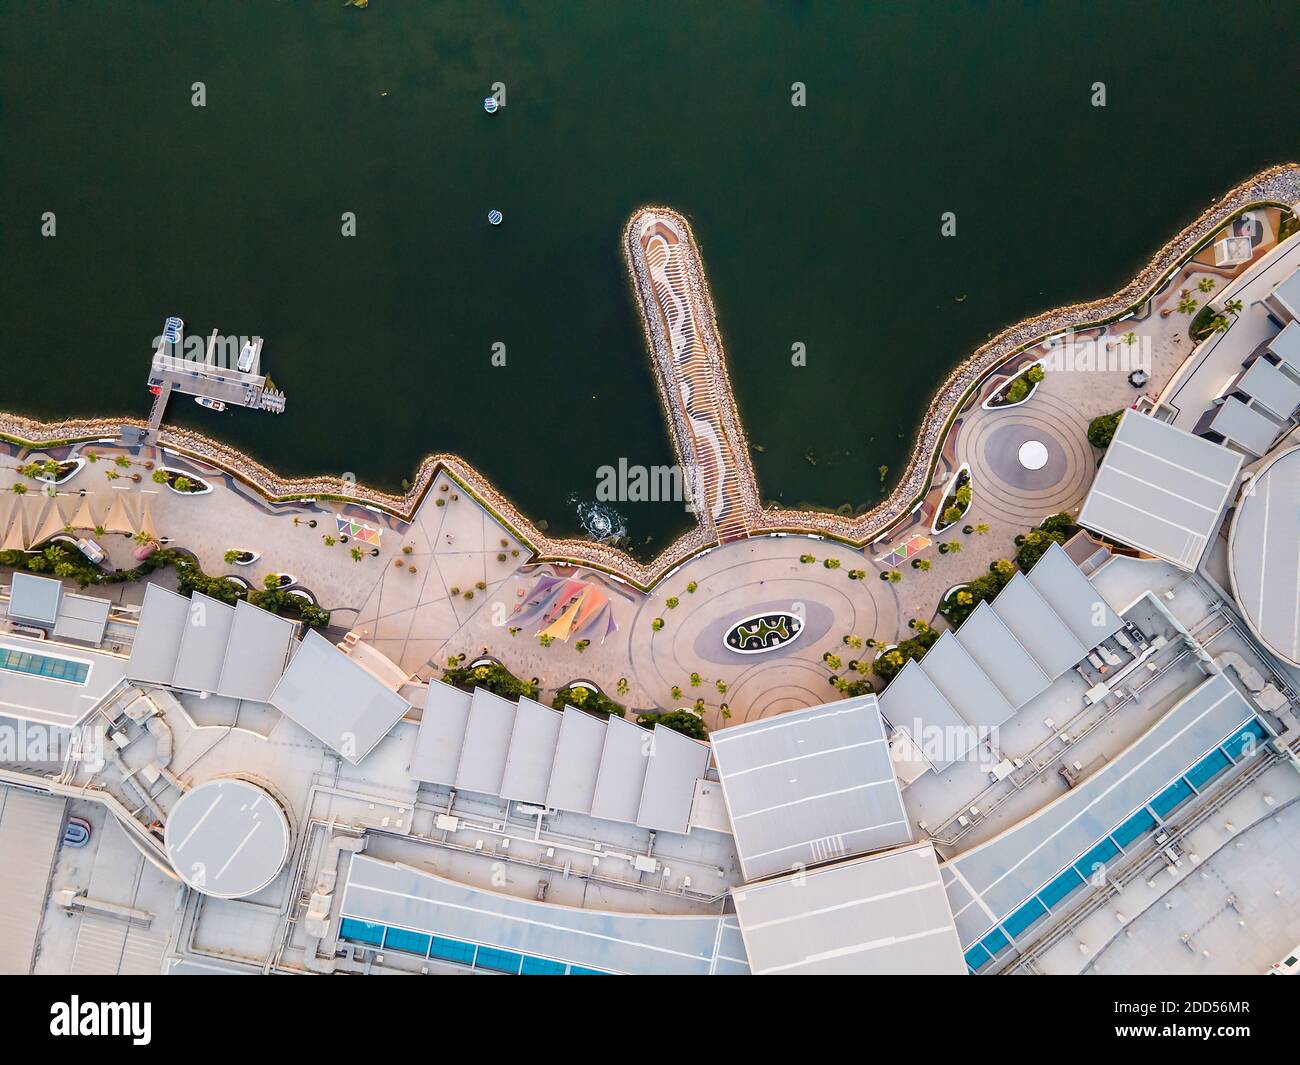 Ras al Khaimah, United Arab Emirates - October 23, 2020: Aerial view of Manar mall and the promenade in Ras al Khaimah emirate in the United Arab Emir Stock Photo